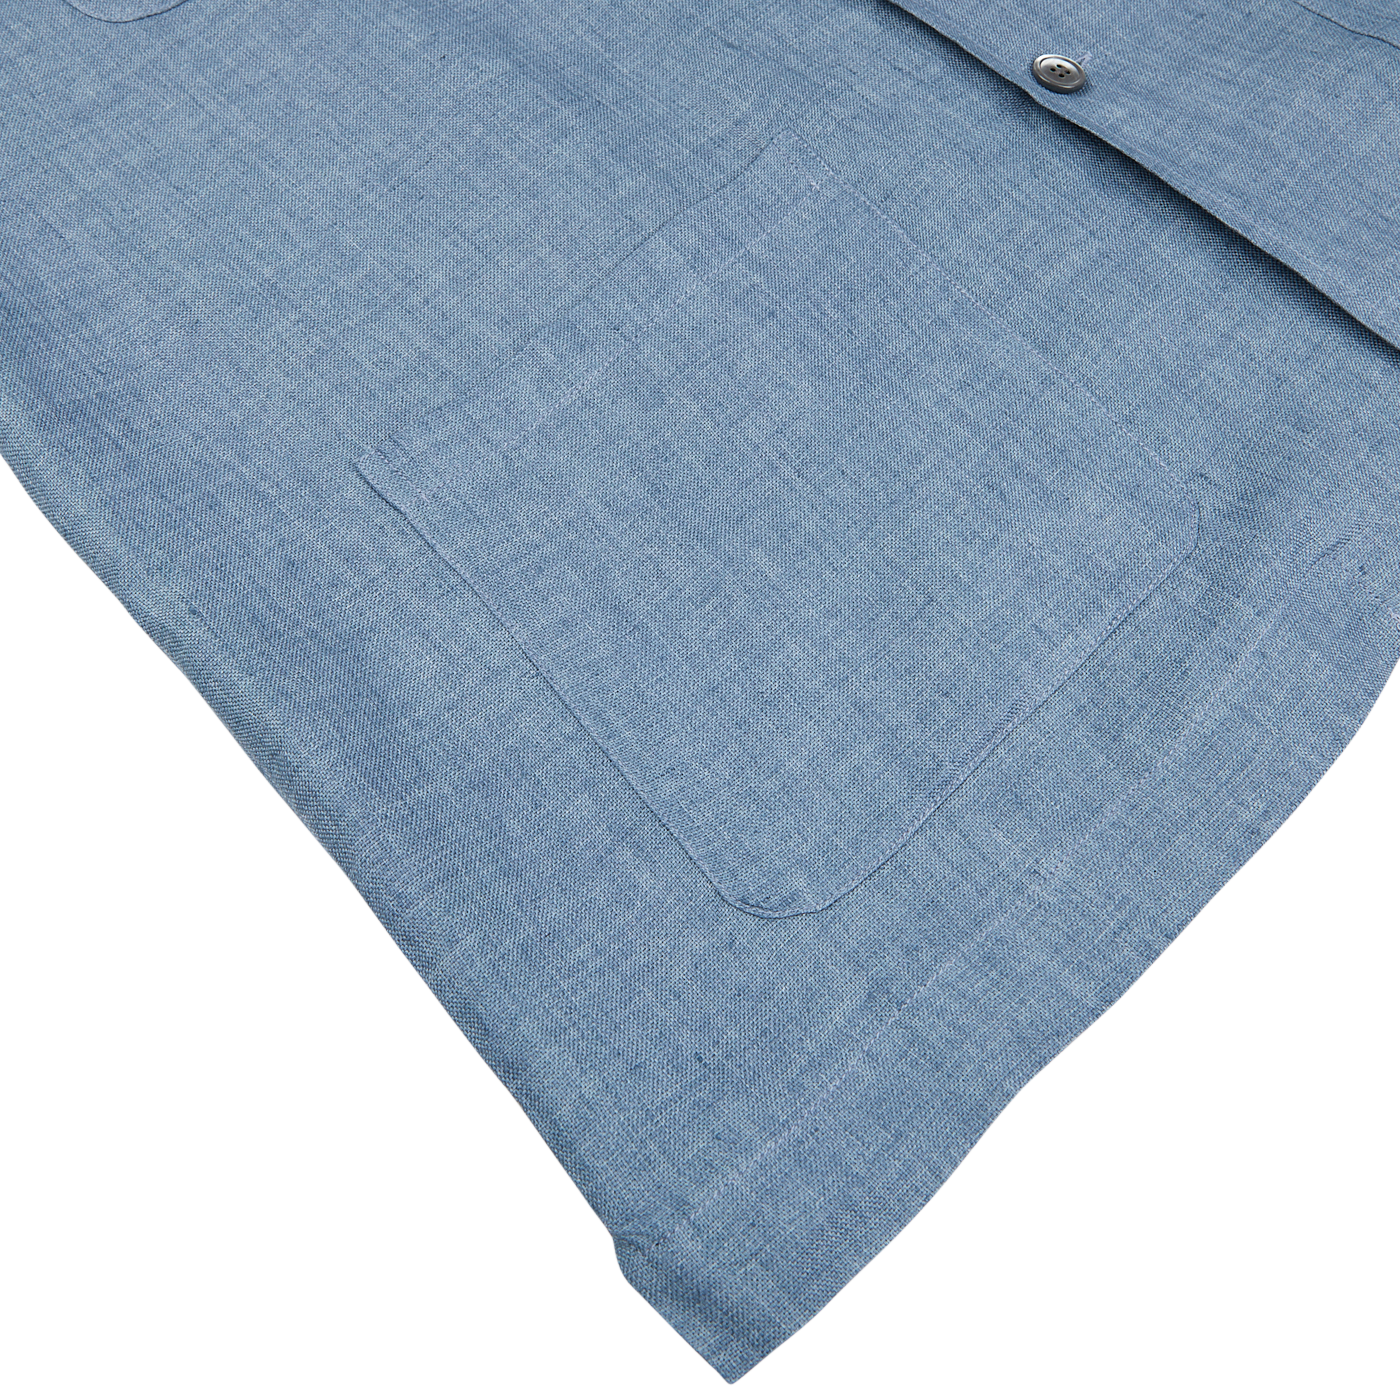 Mazzarelli Indigo blue denim shirt laid flat, detailed view of chest pocket and button.